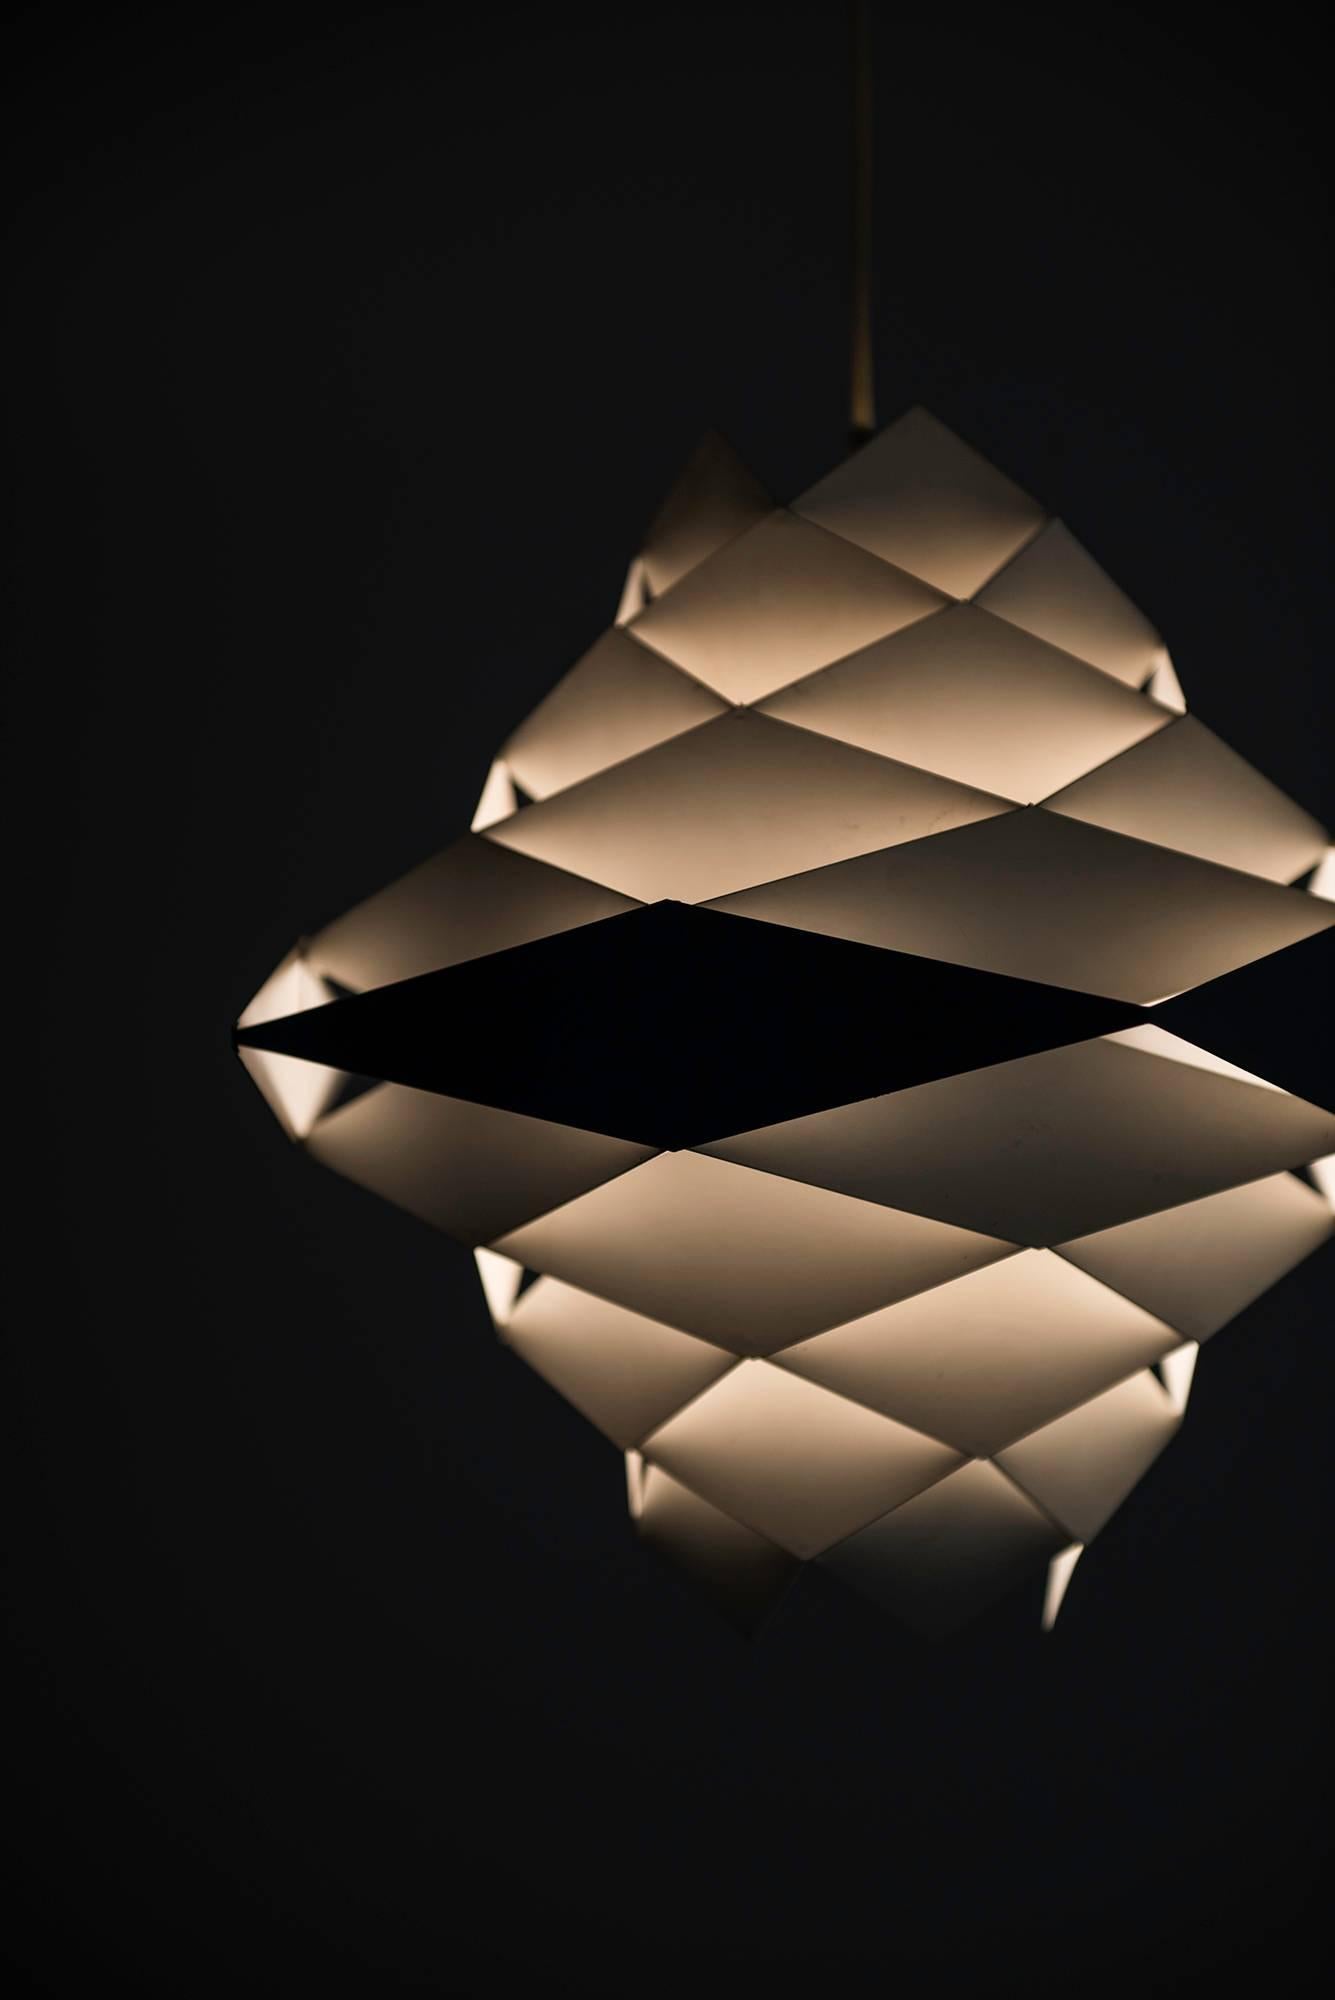 Ceiling lamp model Symfoni designed by Preben Dahl. Produced by Hans Følsgaard A/S in Denmark.